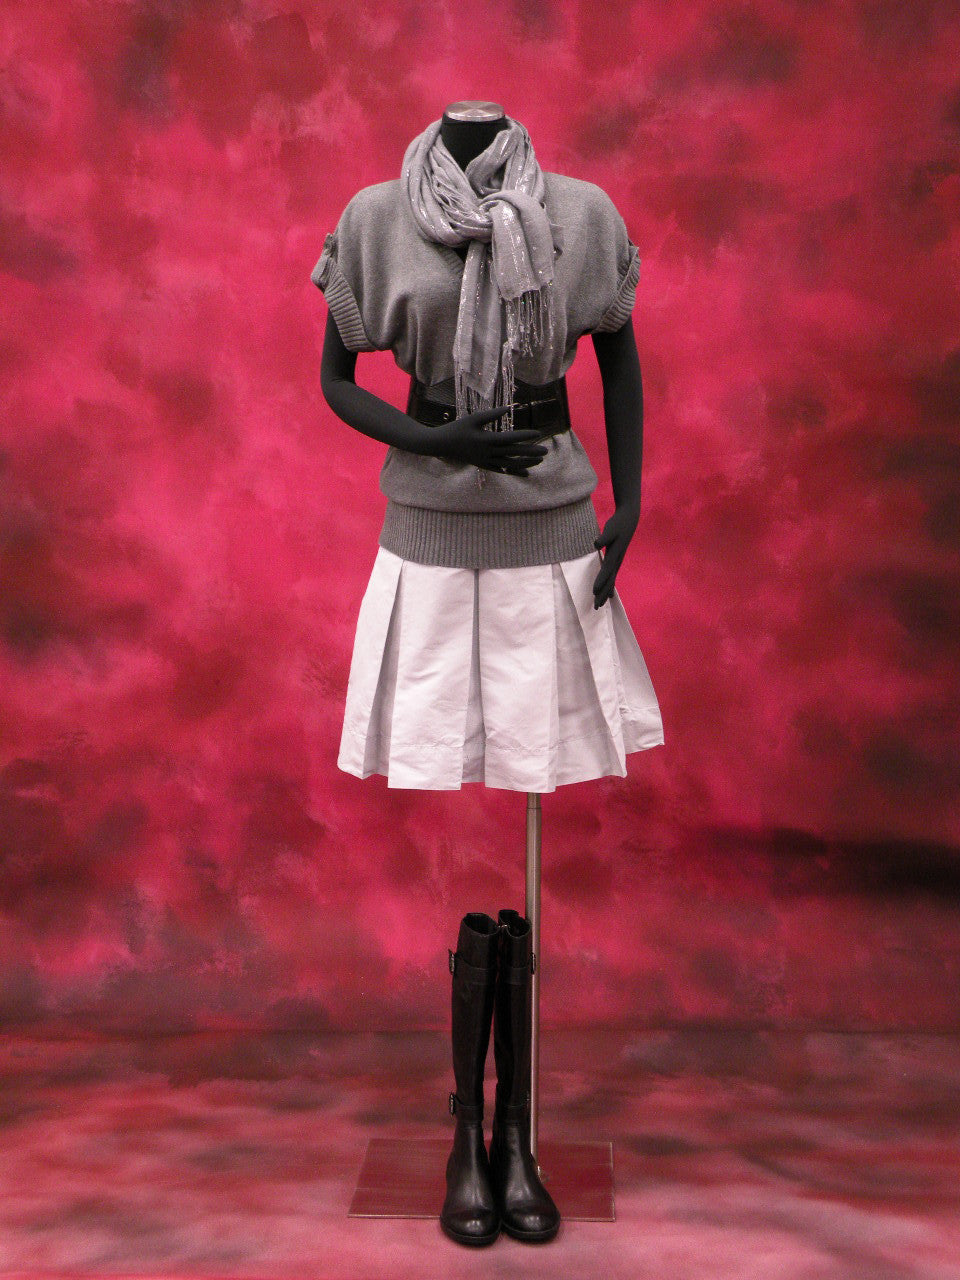 Plus Size Hanging Half-leg Female Cloth Mannequin Torso: Size 16 –  Mannequin Madness